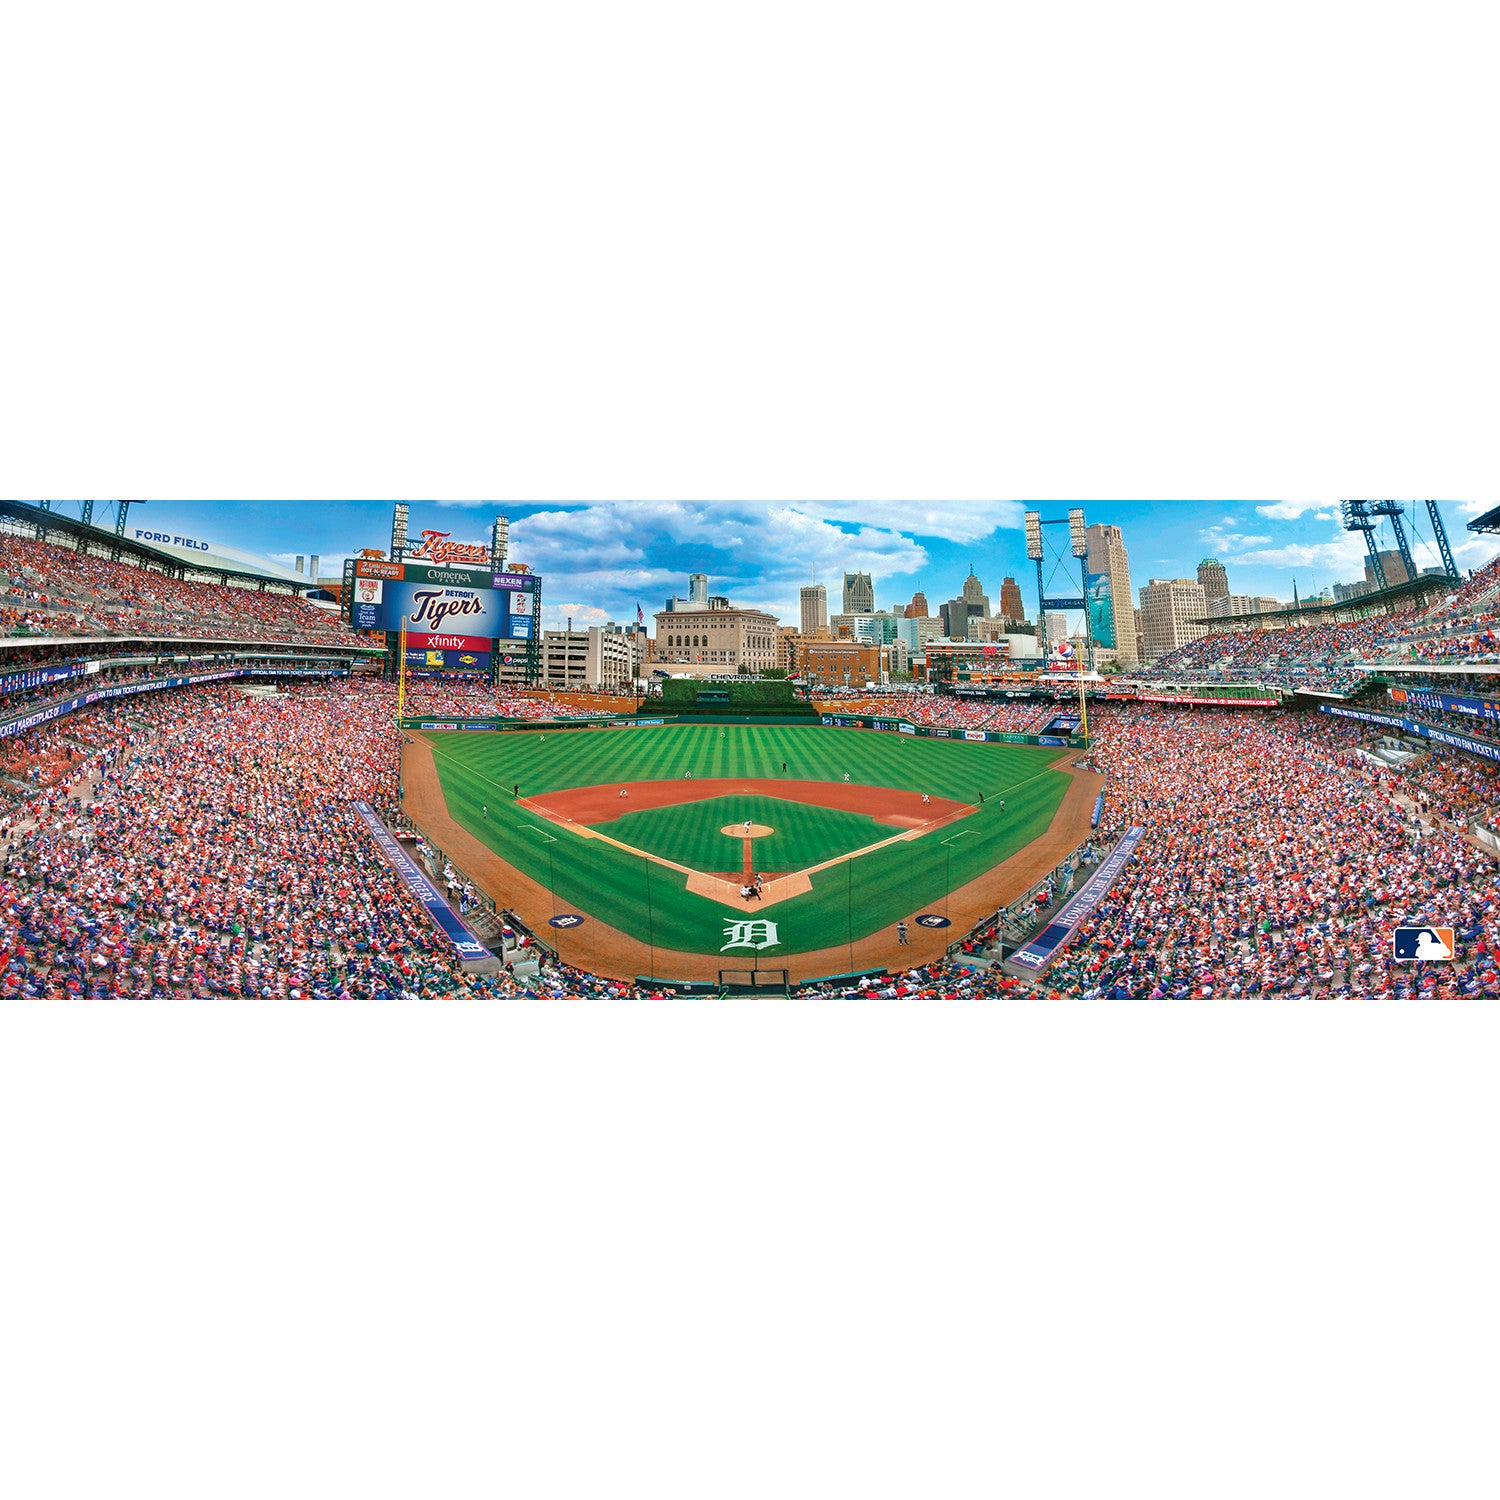 Detroit Tigers - 1000 Piece Panoramic Puzzle